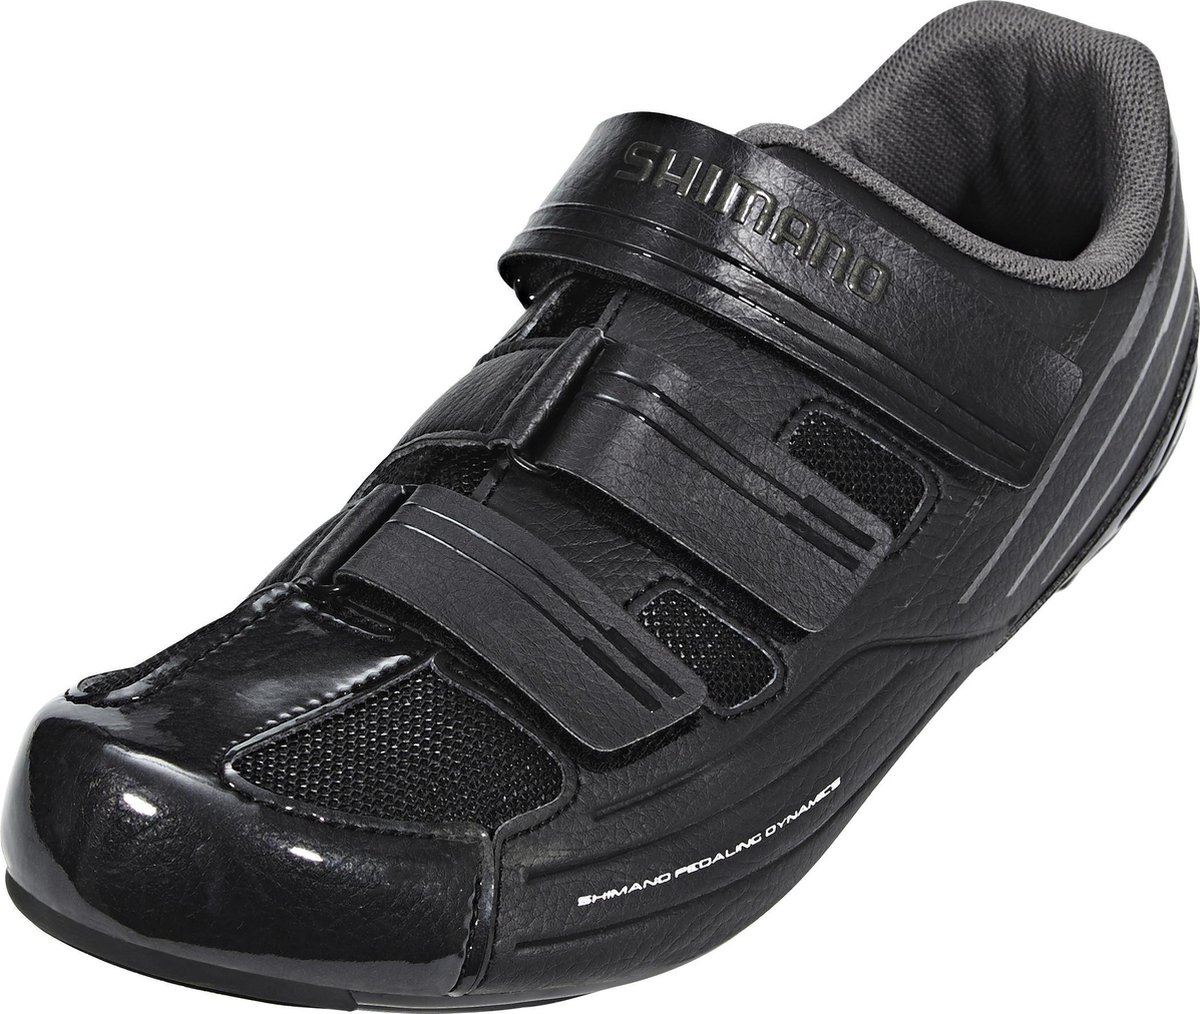 Shimano SH-RP2L schoenen Heren zwart